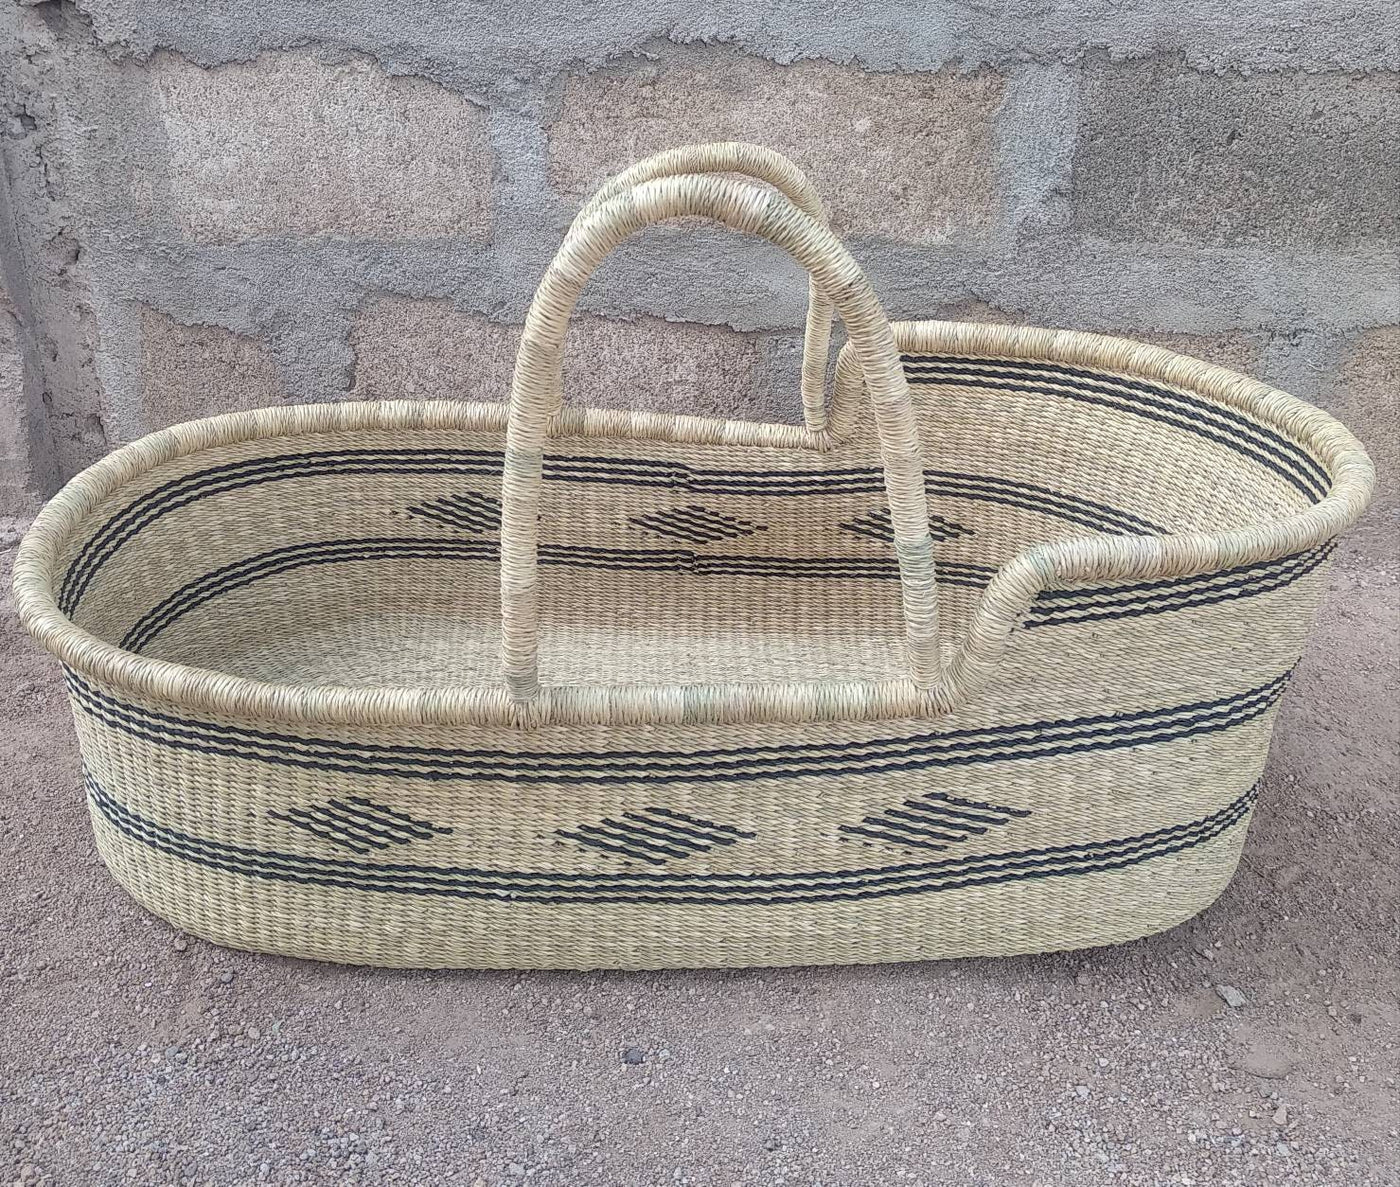 Moses basket for baby | platform bed | Baby shower gift | Kids bed | African moses basket | Baby Bassinet |New parent gift | African Basket - AfricanheritageGH